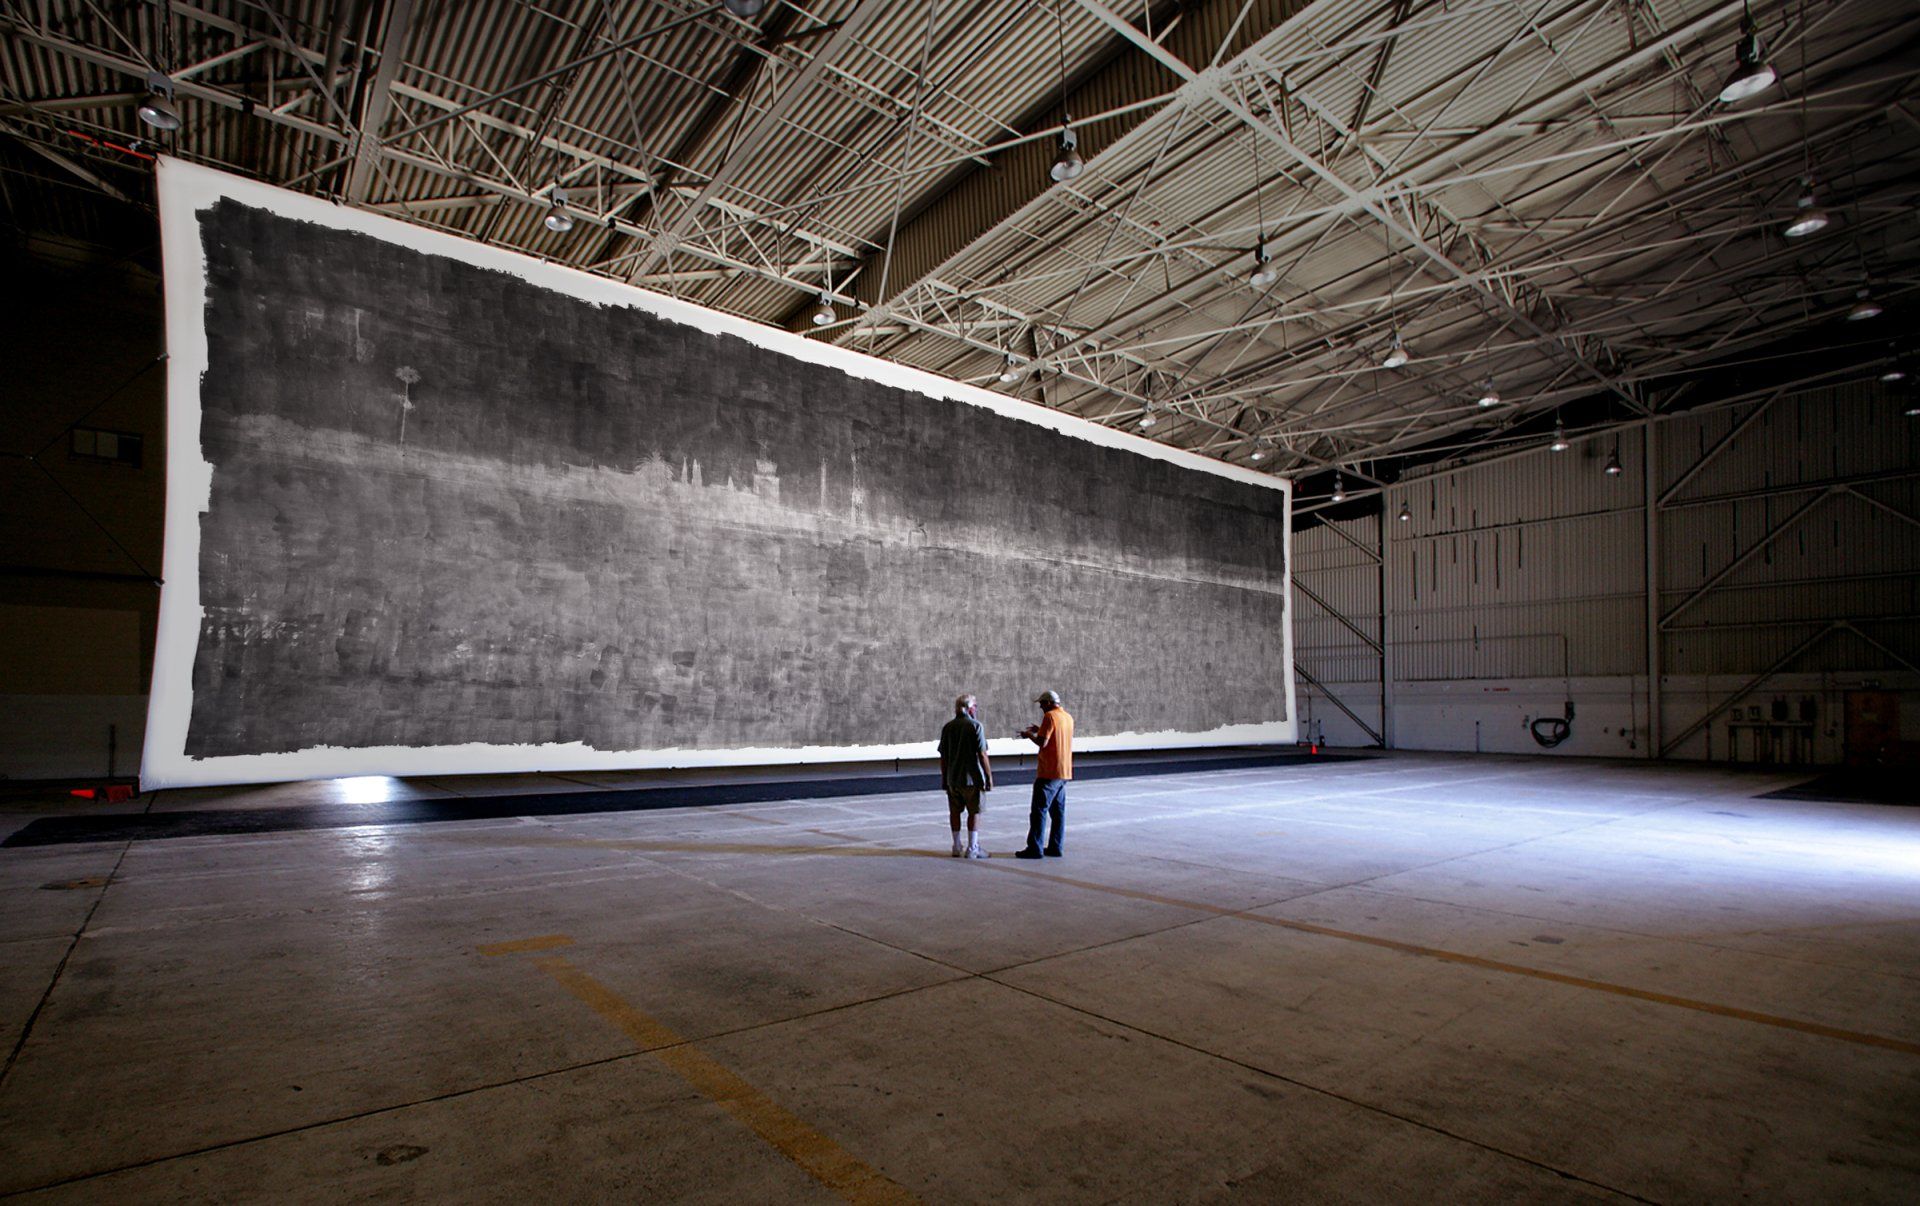 World's Largest Pinhole Camera: world record set in Irvine, California